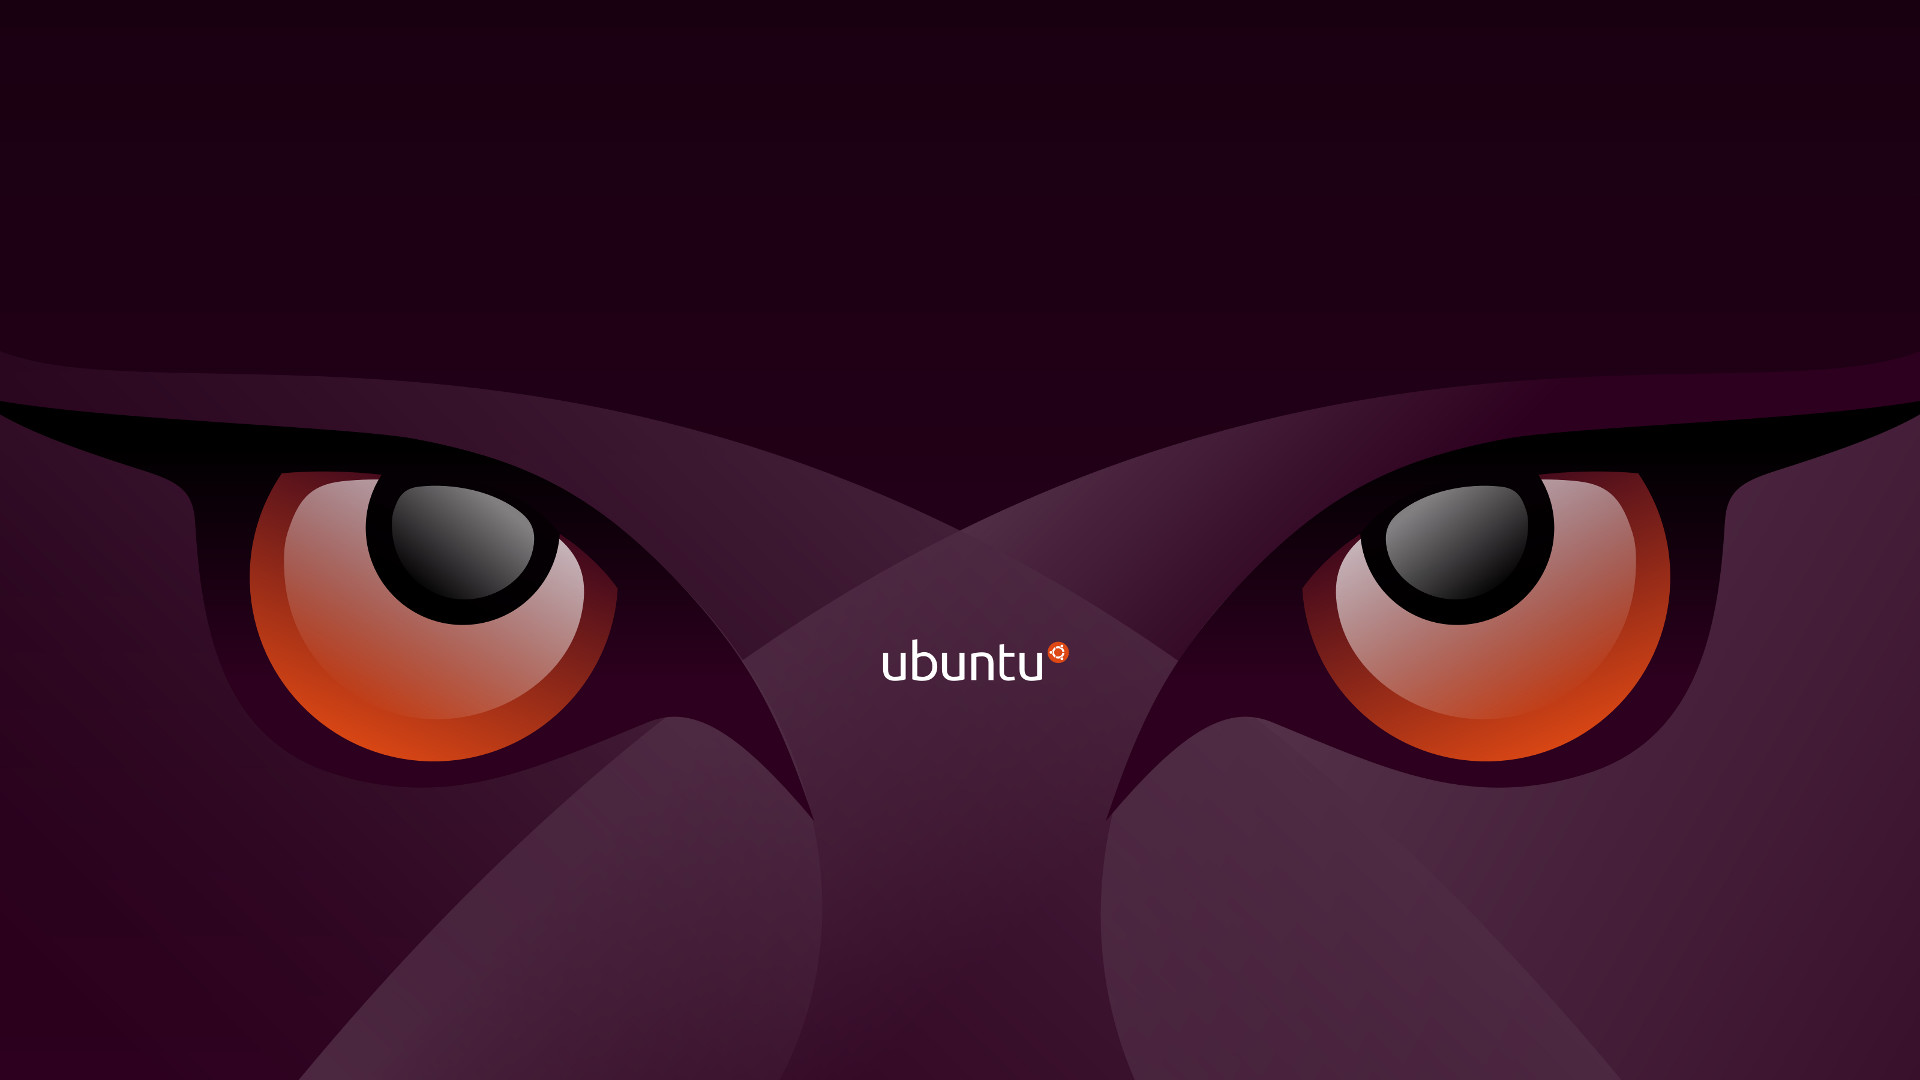 1920x1080 ... Ubuntu Linux Wallpapers Desktop ...